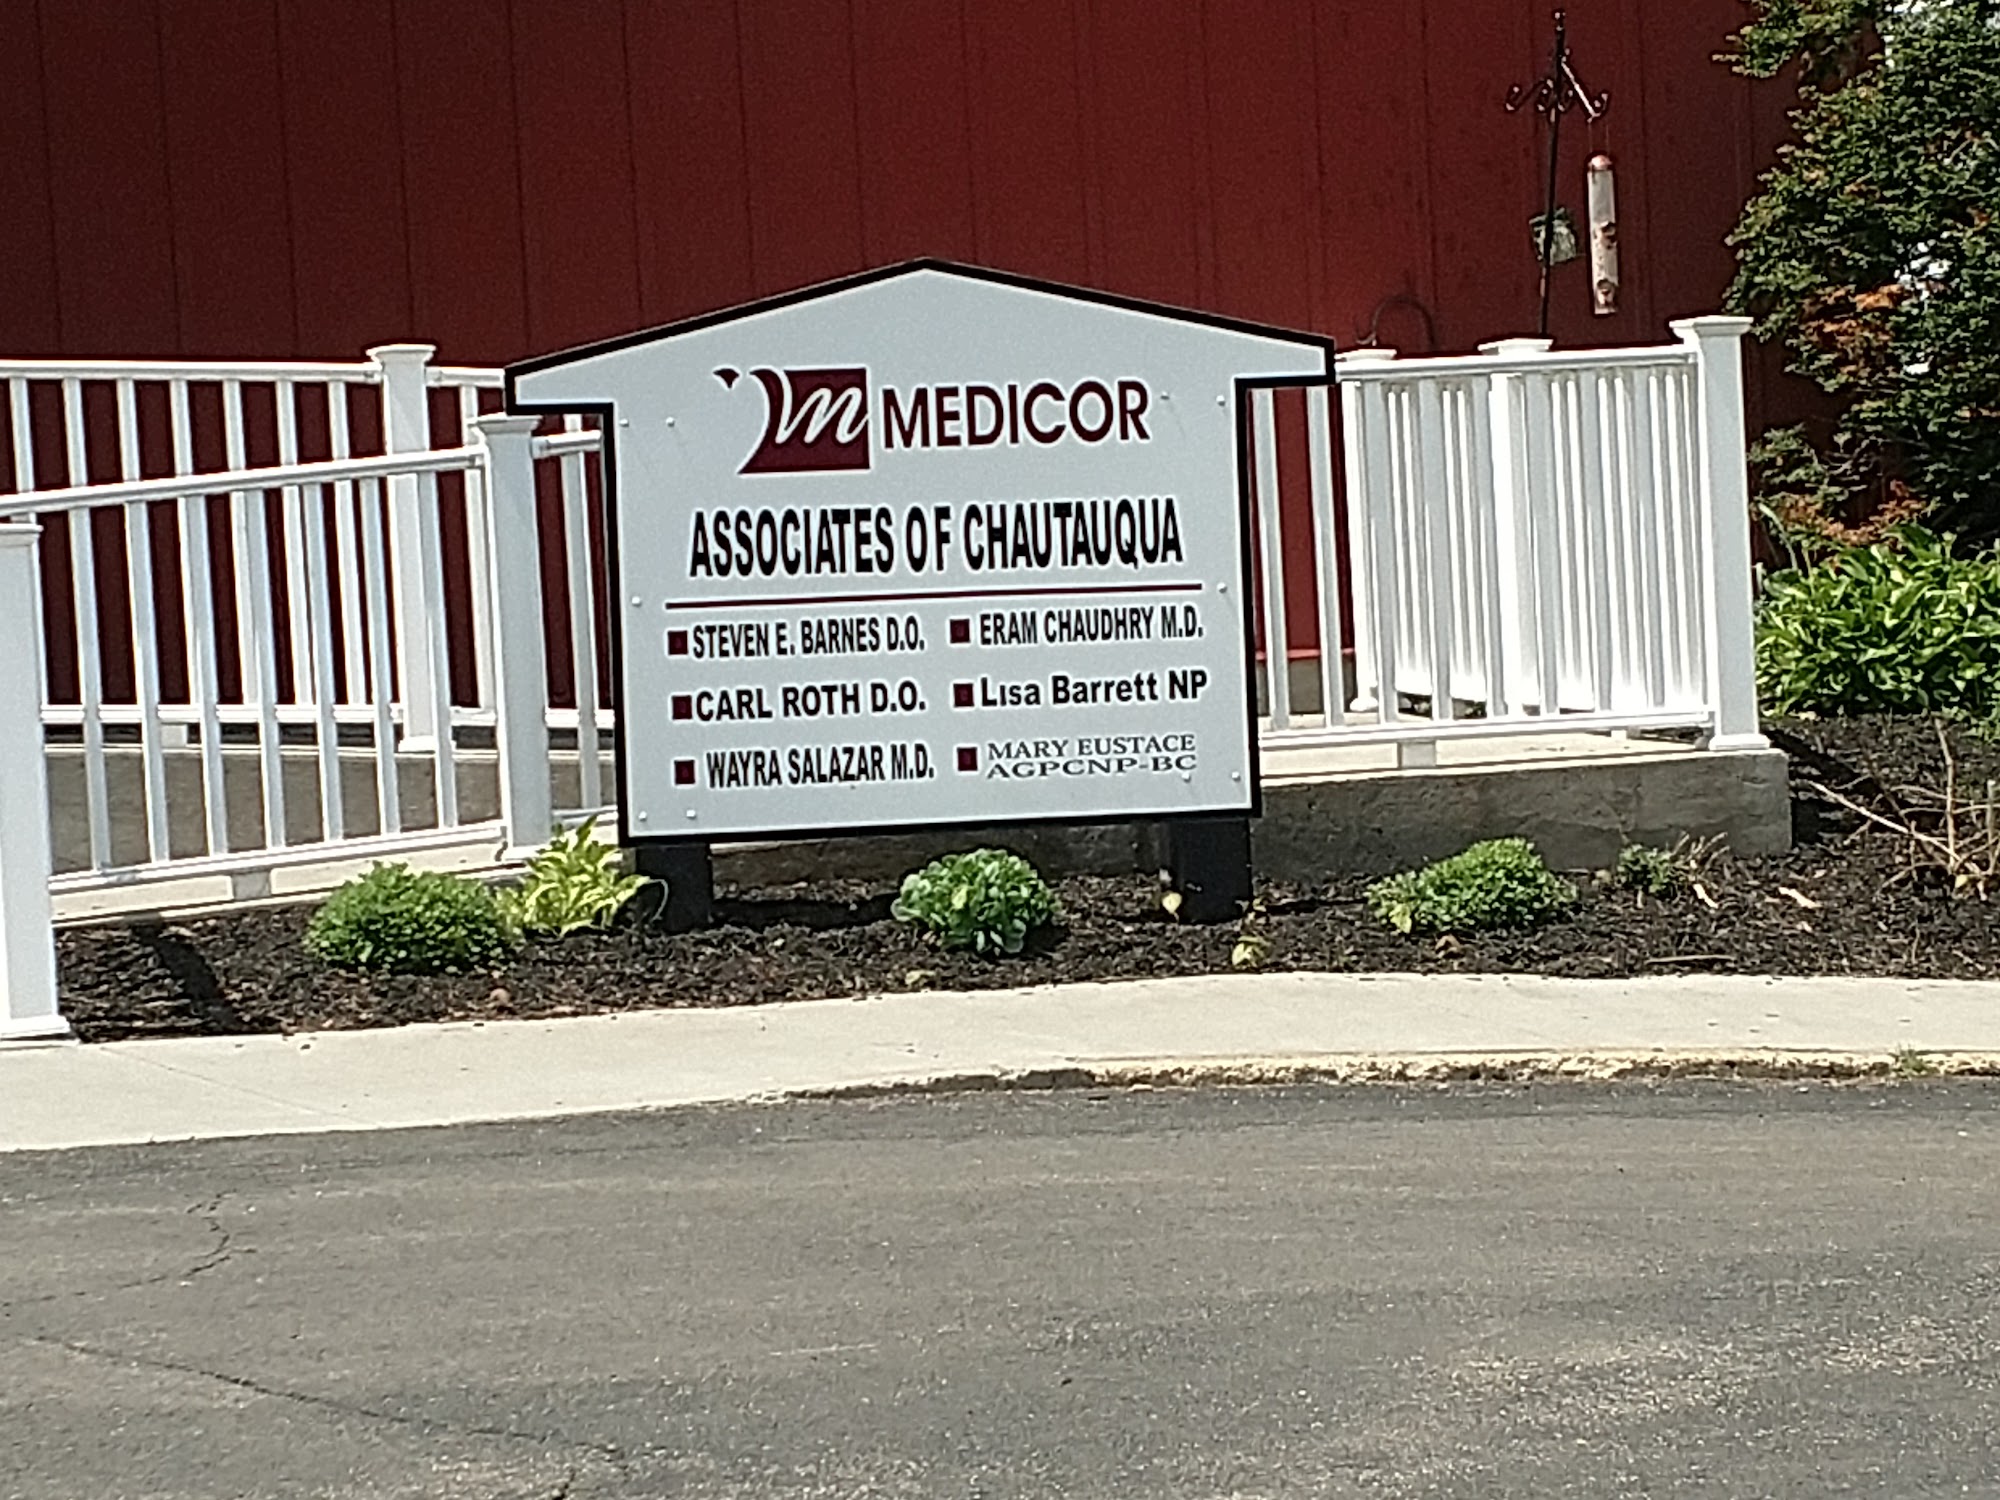 Medicor Associates of Chautauqua 113 Main St, Silver Creek New York 14136